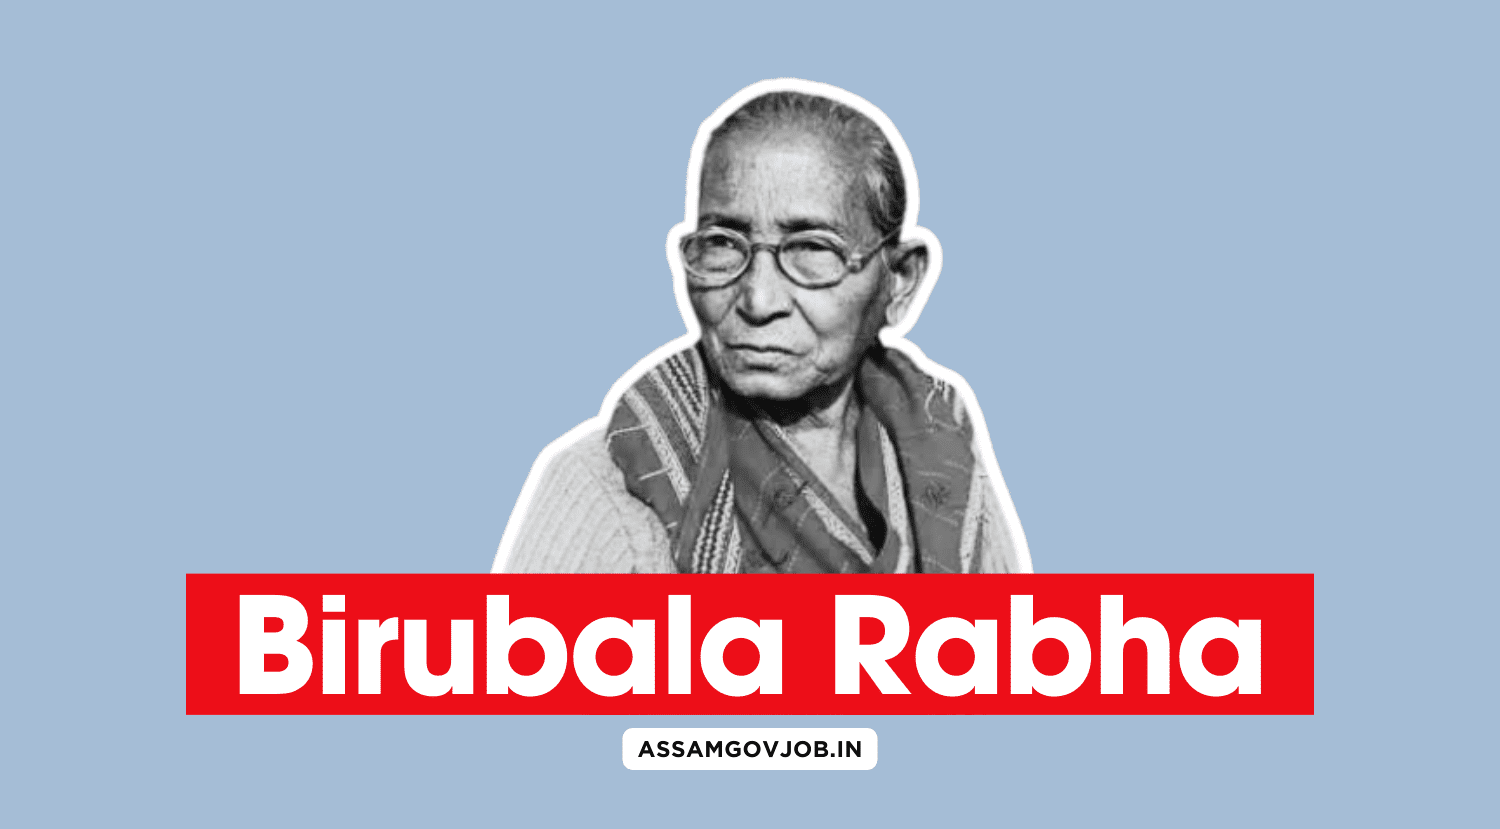 Birubala Rabha